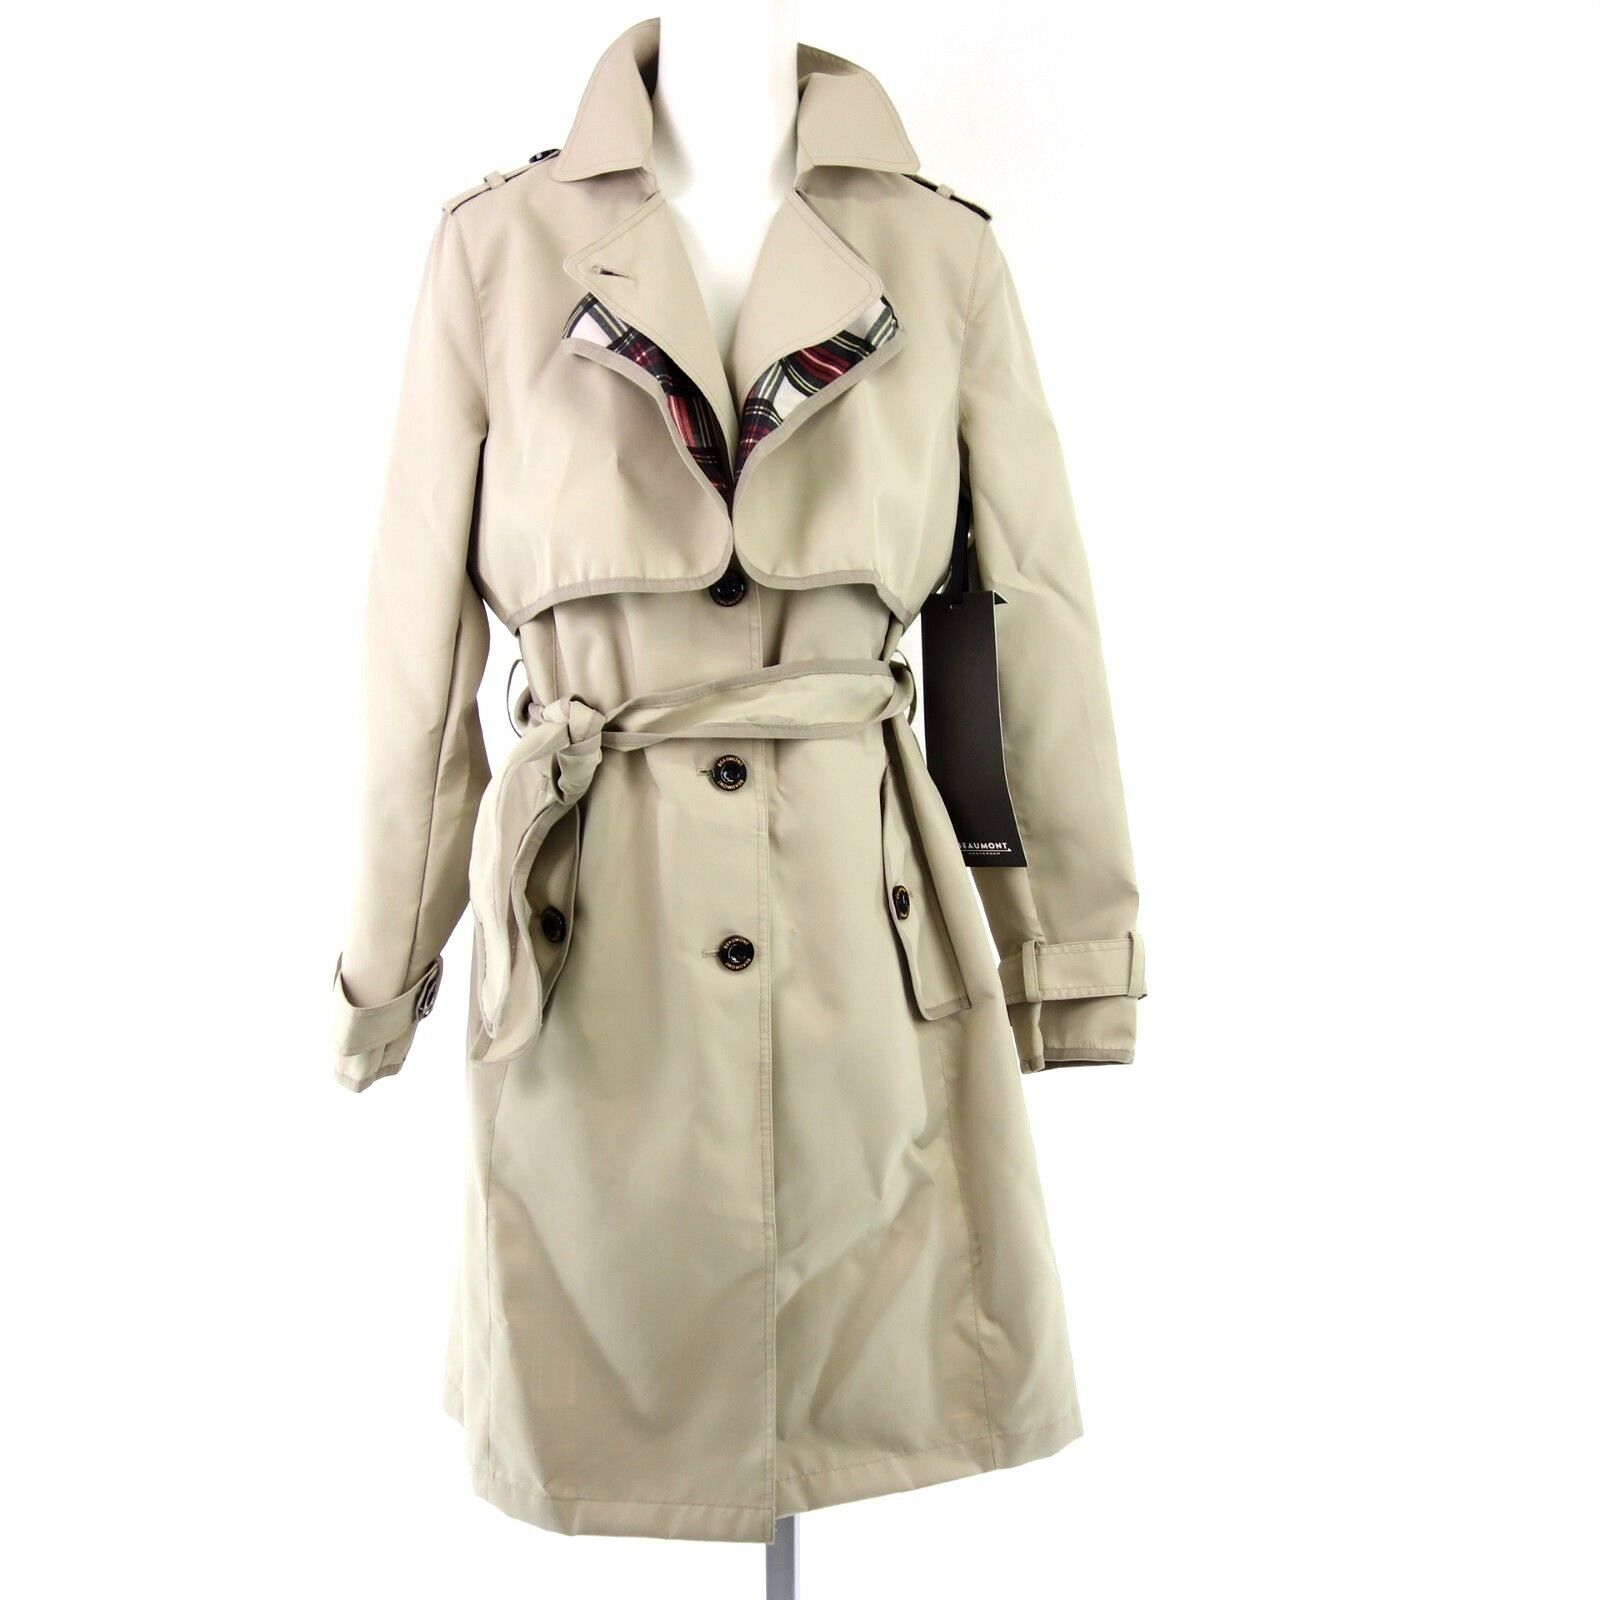 Beaumont Damen Mantel Größe 38 M Beige Trenchcoat Regenmantel Gürtel Np 369 Neu